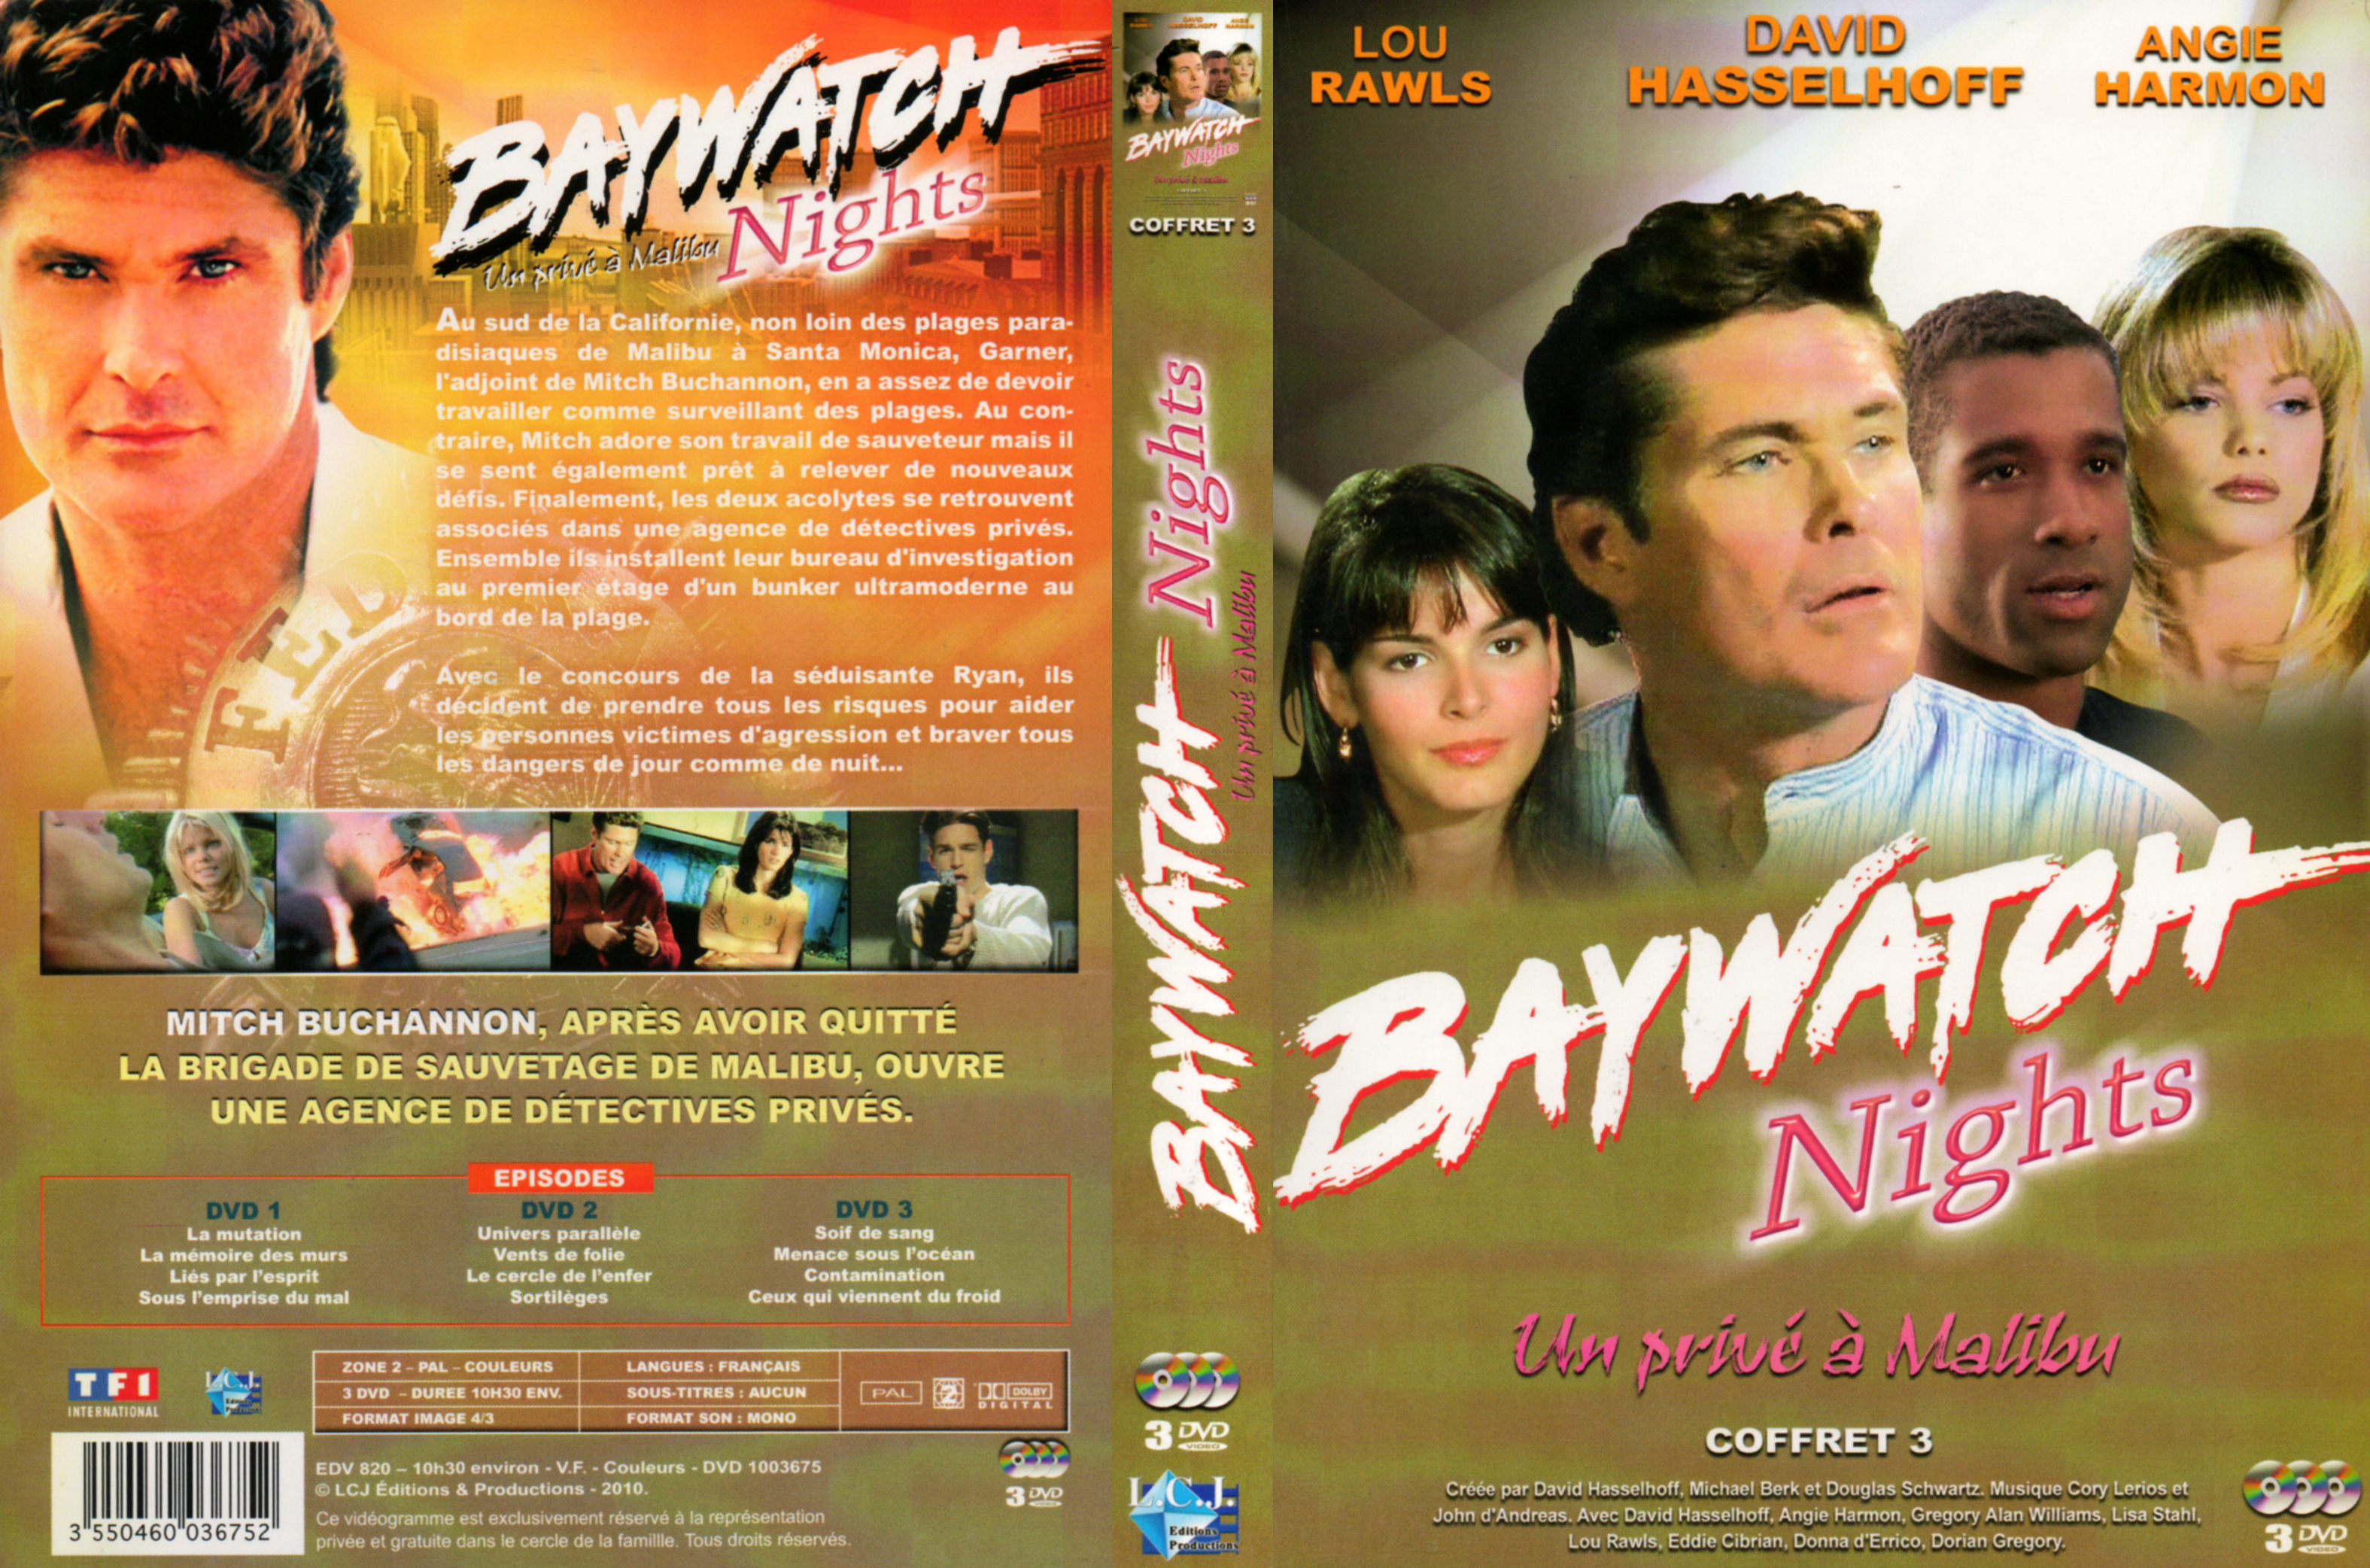 Jaquette DVD Baywatch Nights - Un priv  Malibu Saison 3